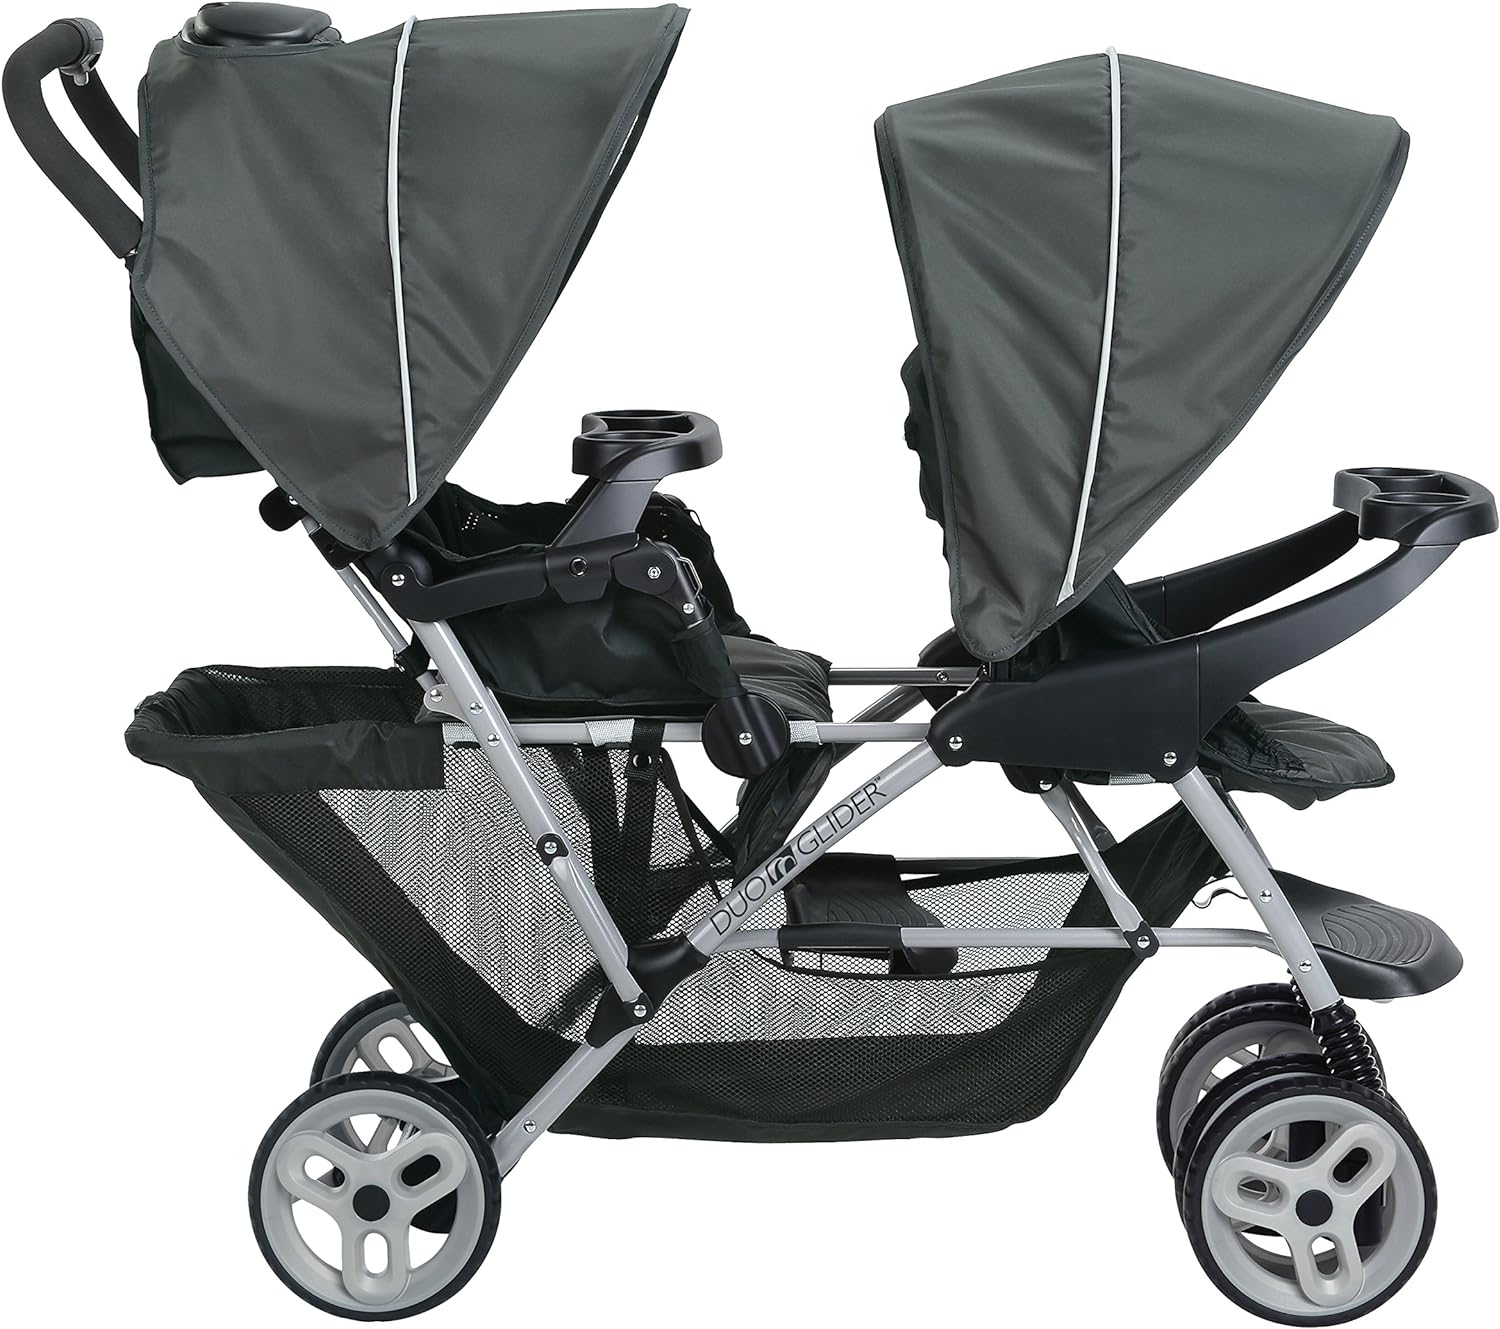 Graco DuoGlider Double Stroller + Graco SnugRide 35 Lite LX Infant Car Seat Bundle - Graco DuoGlider Double Stroller Review